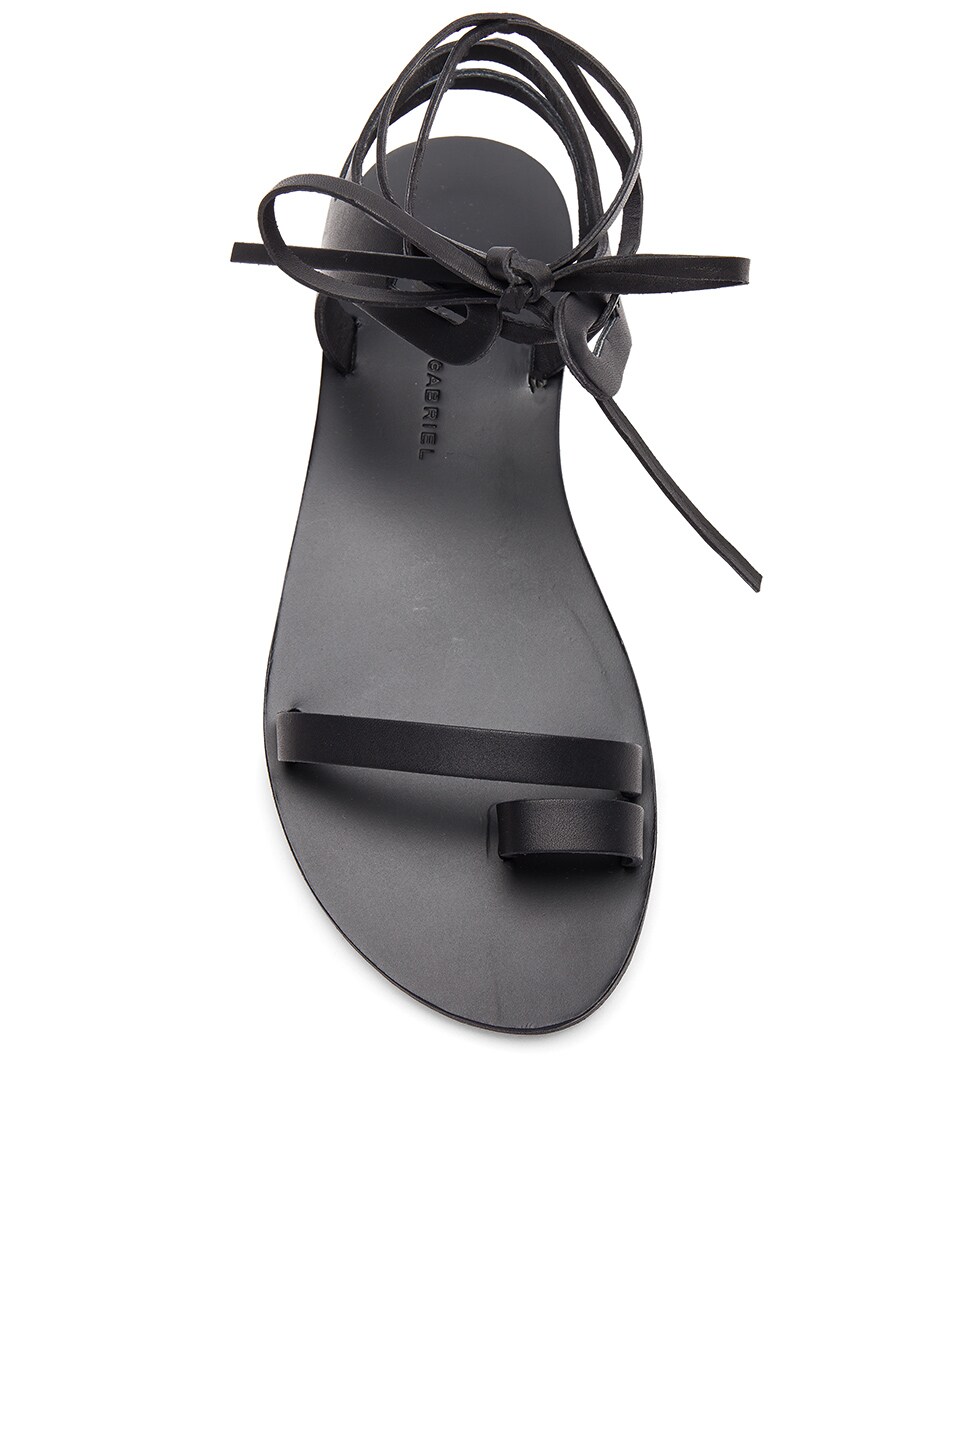 VALIA GABRIEL Leblon Leather Sandals in Black | ModeSens